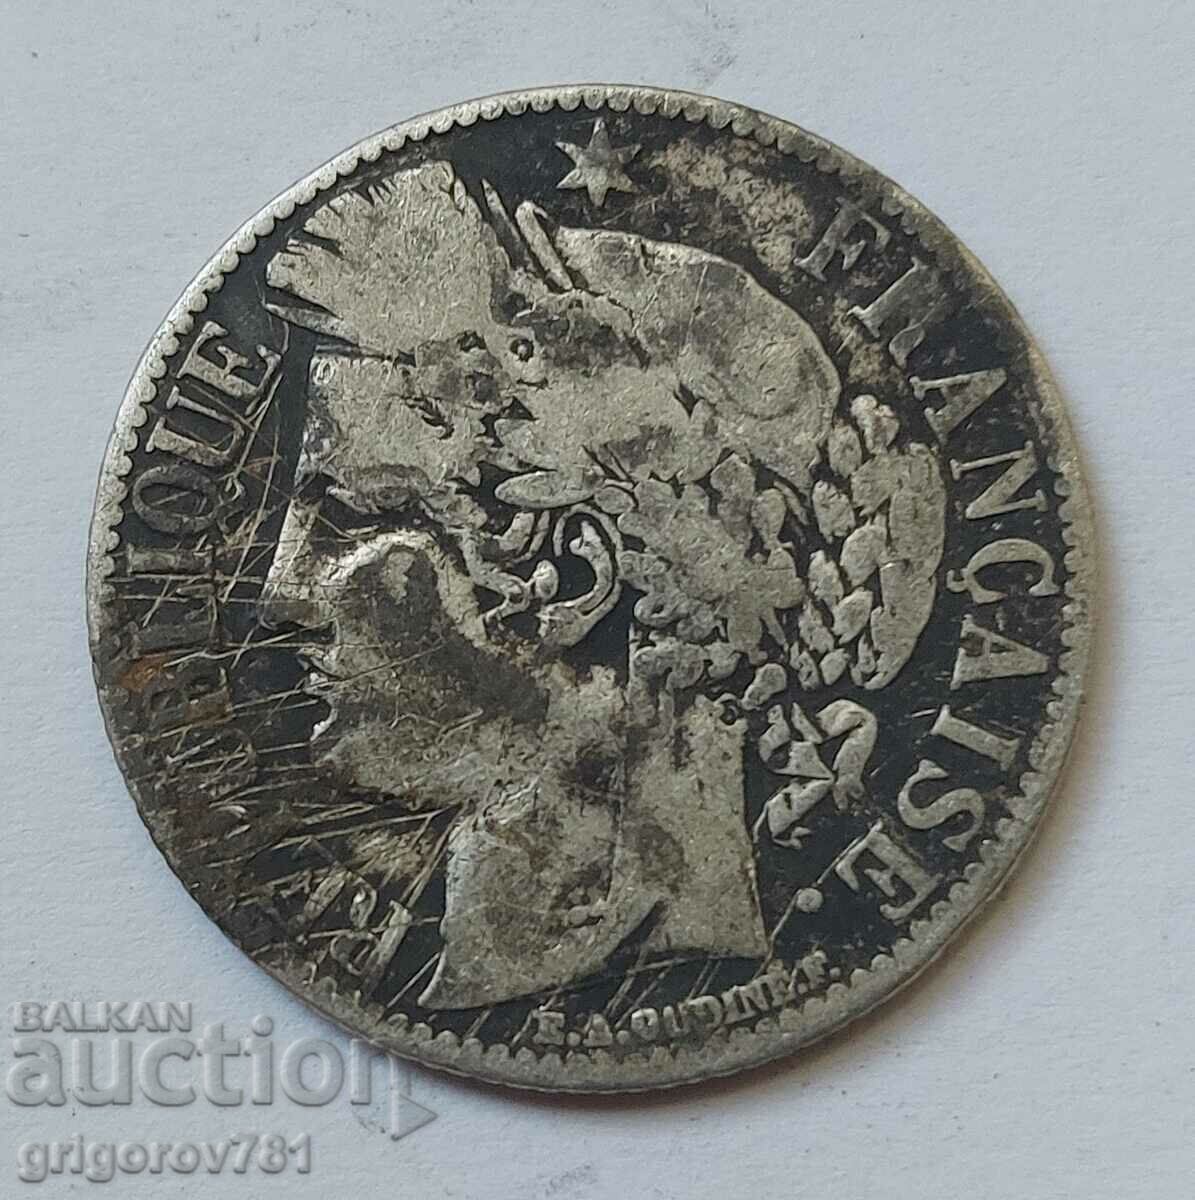 1 Franc Silver France 1872 A - Silver Coin #47